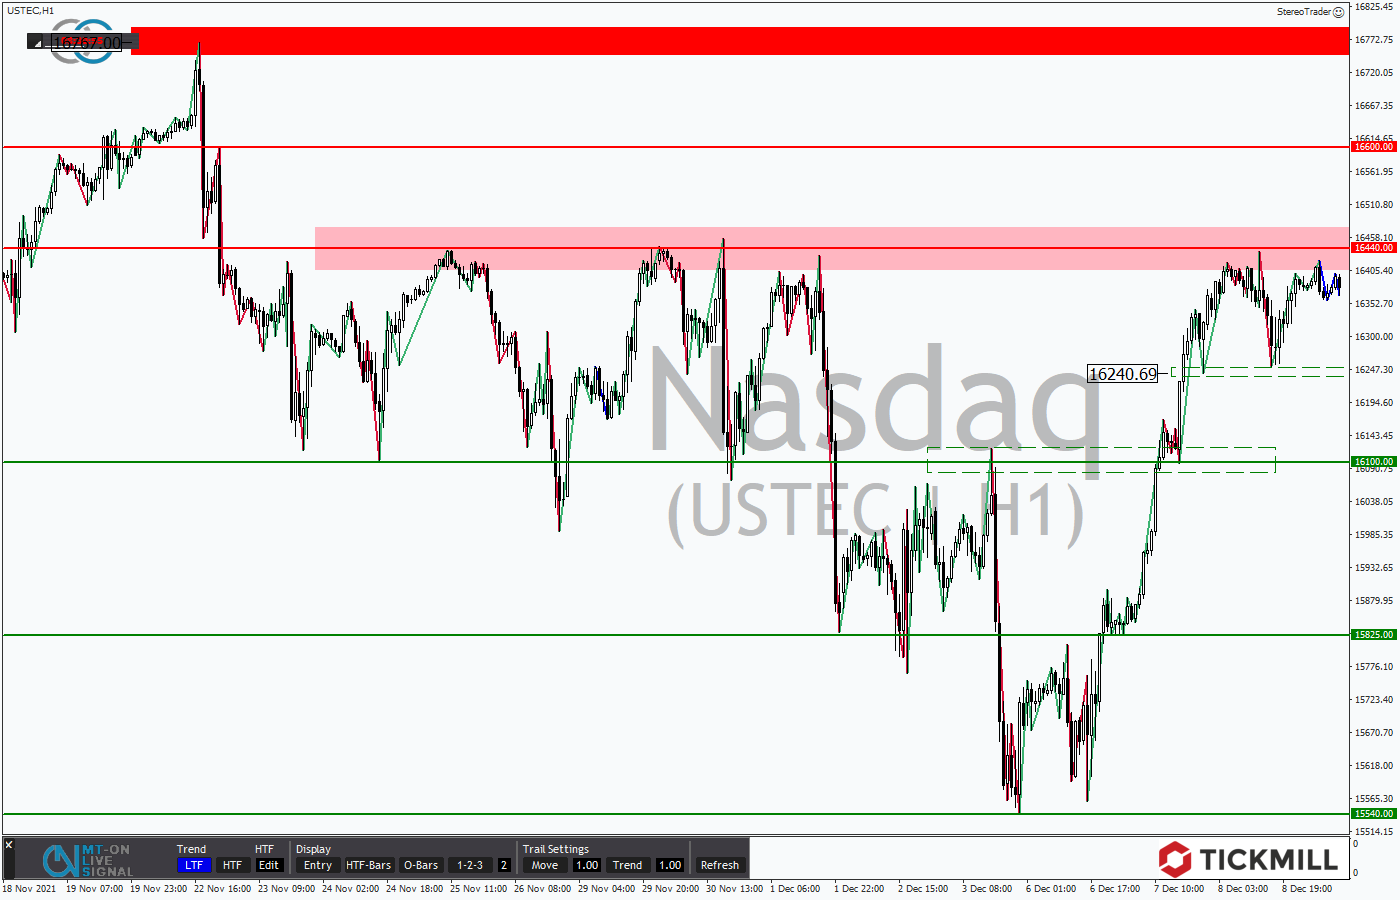 Tickmill-Analyse: NASDAQ im Stundenchart 